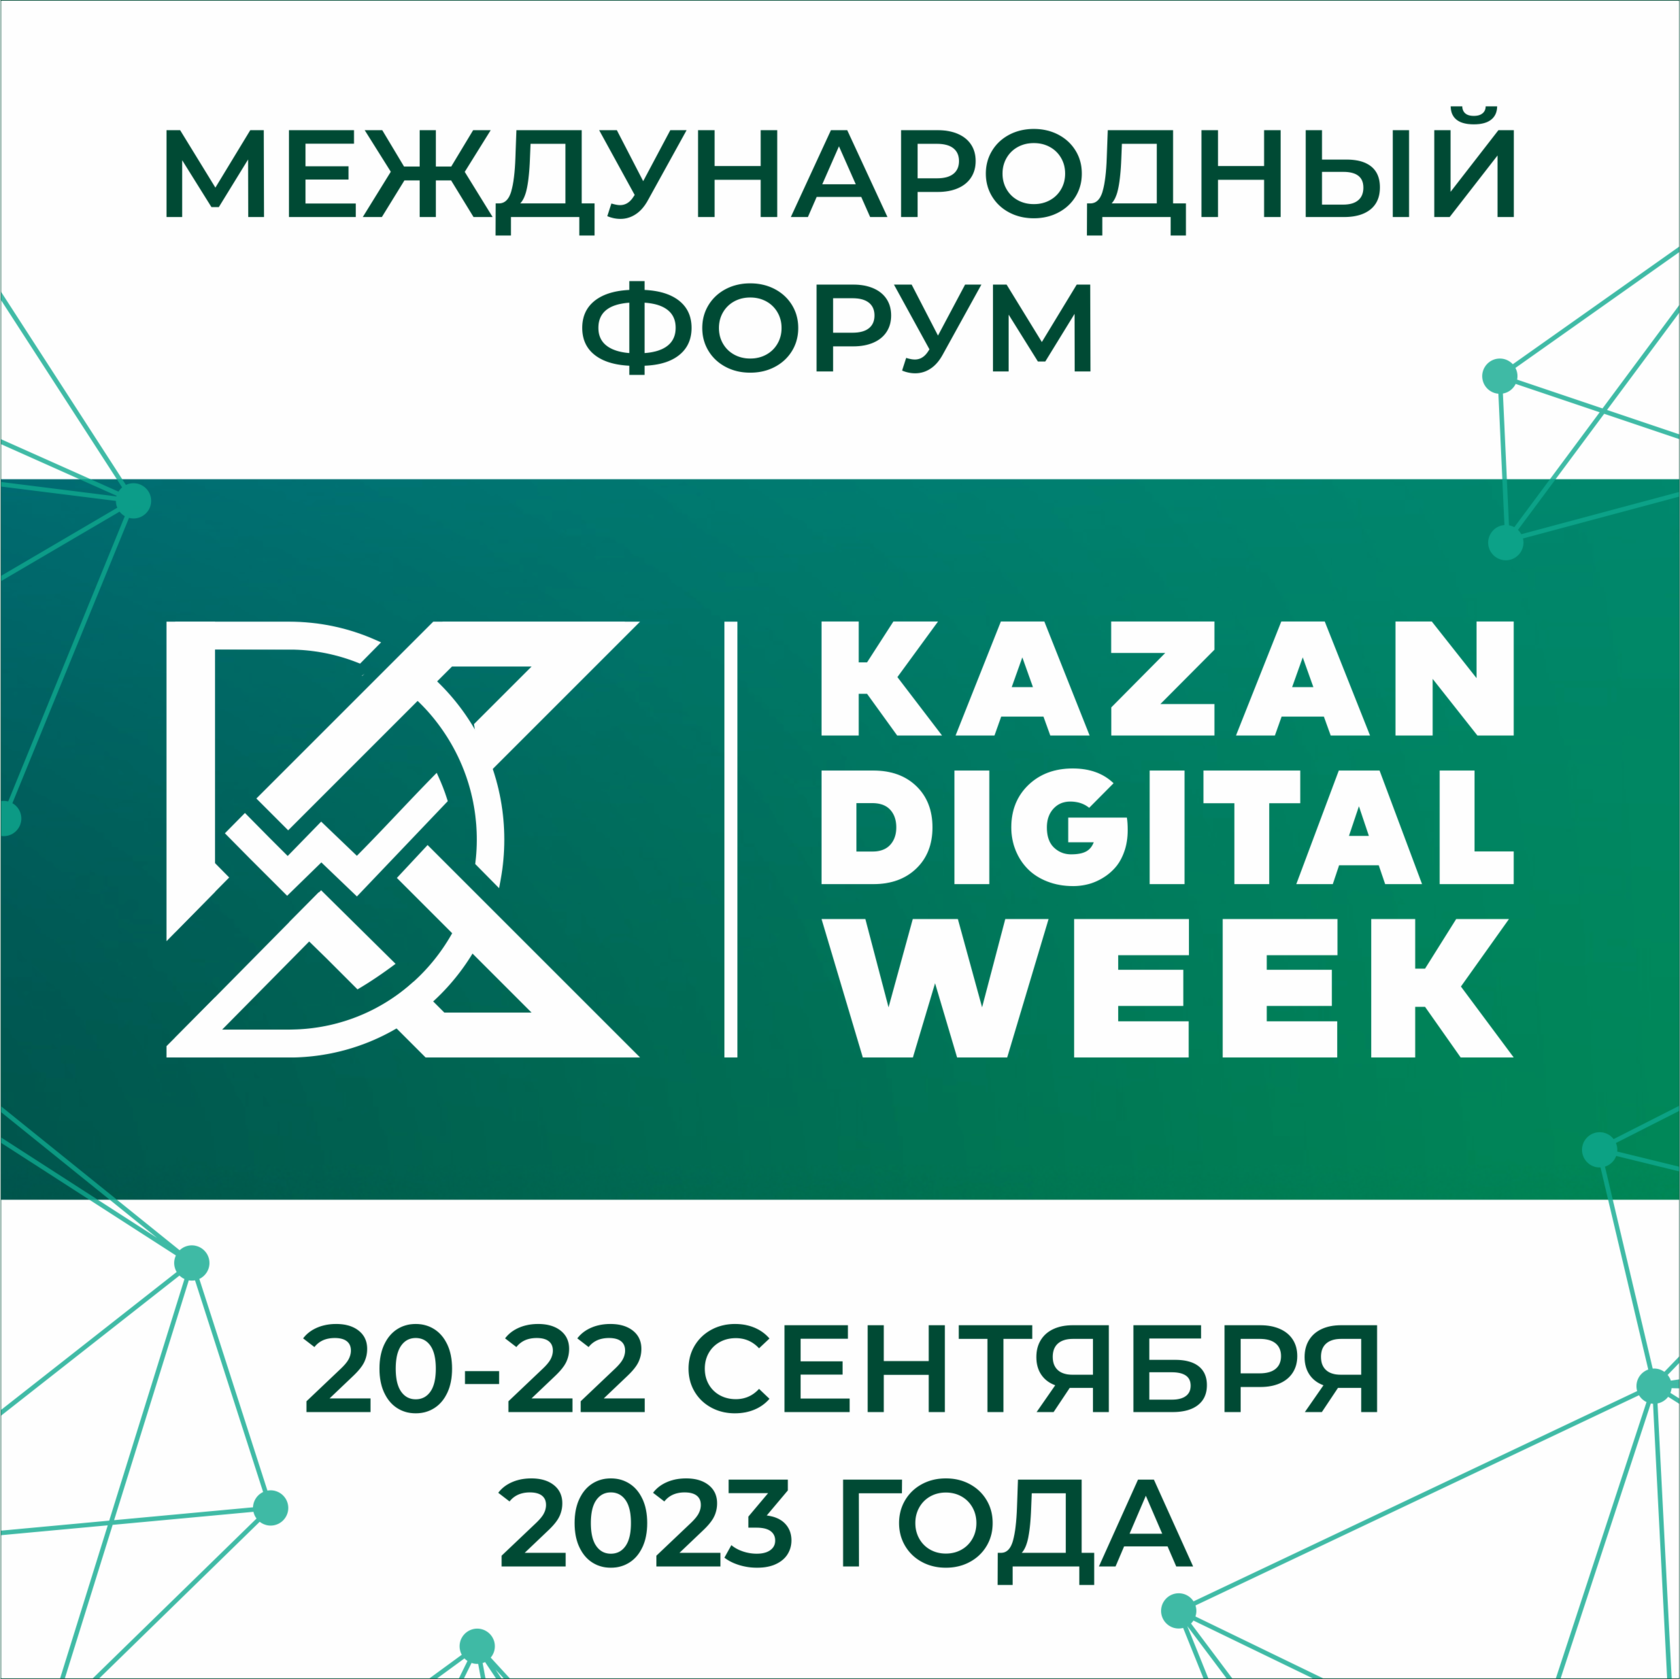 Kazan Digital week 2023. Kazan Digital week 2023 логотип. Международный форум Казань диджитал Вик 2023. Цифровая Казань. 22 неделя 2023